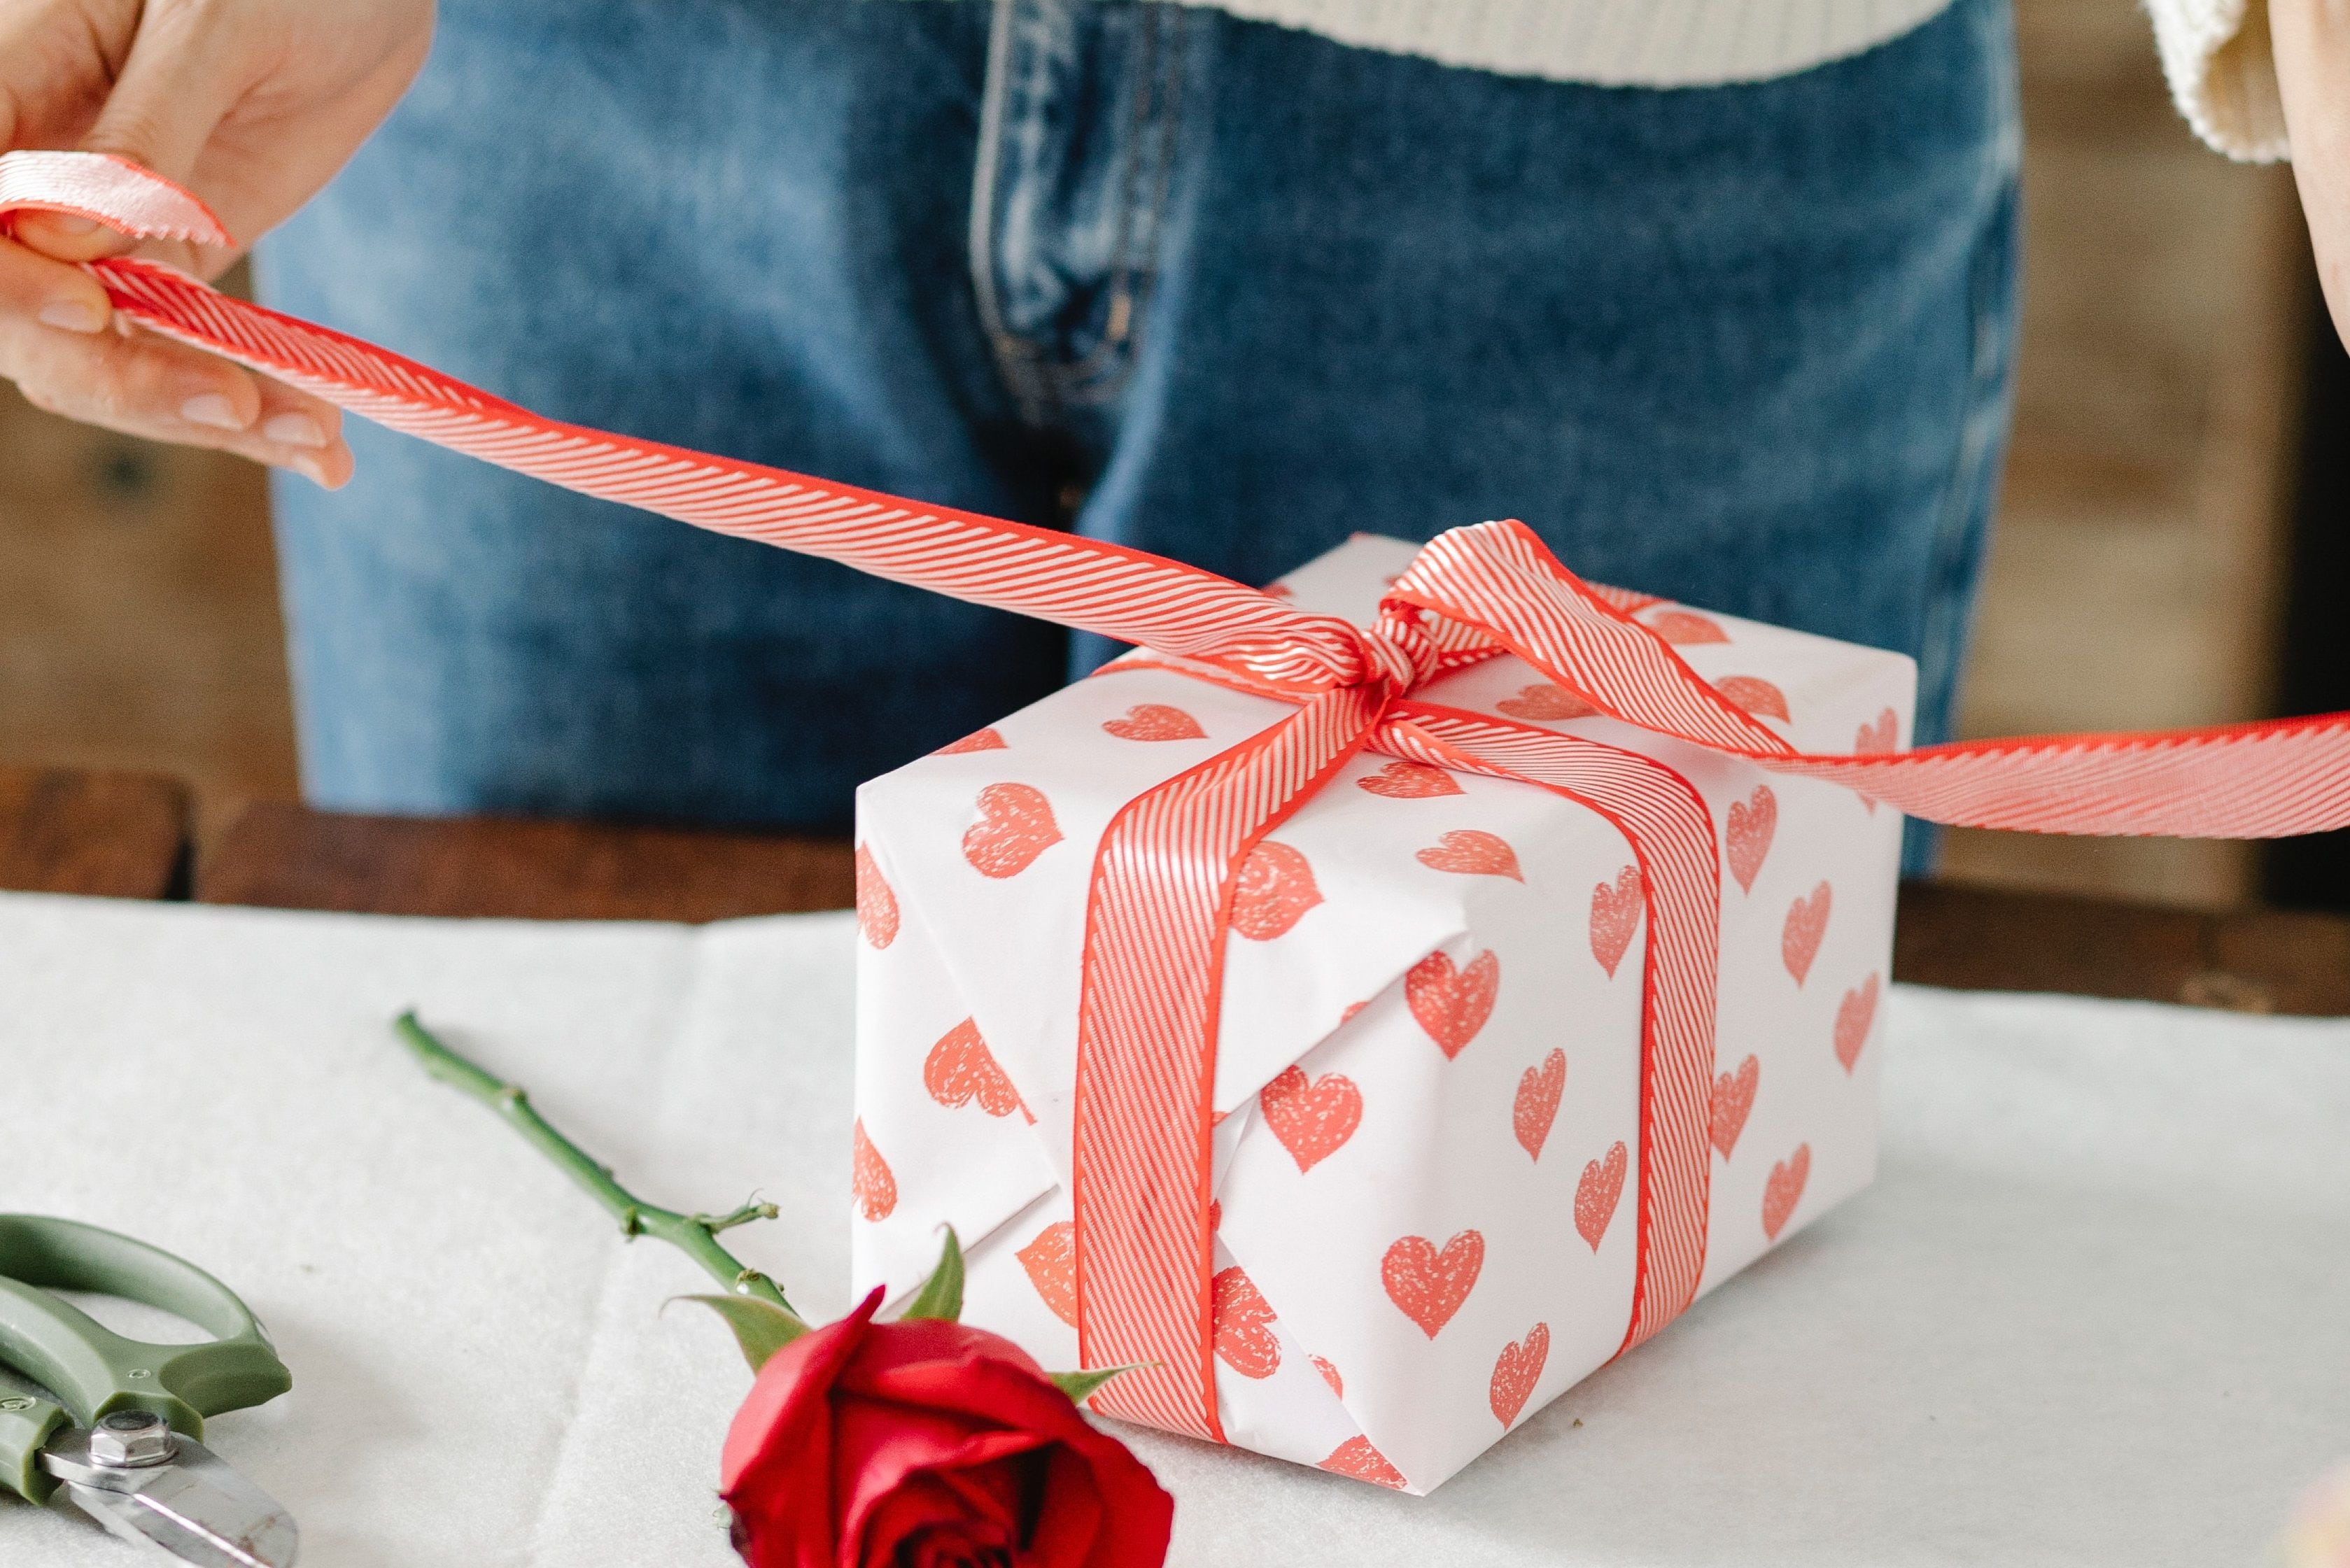 Ideas para San Valentin , detalles,regalos, decoración.